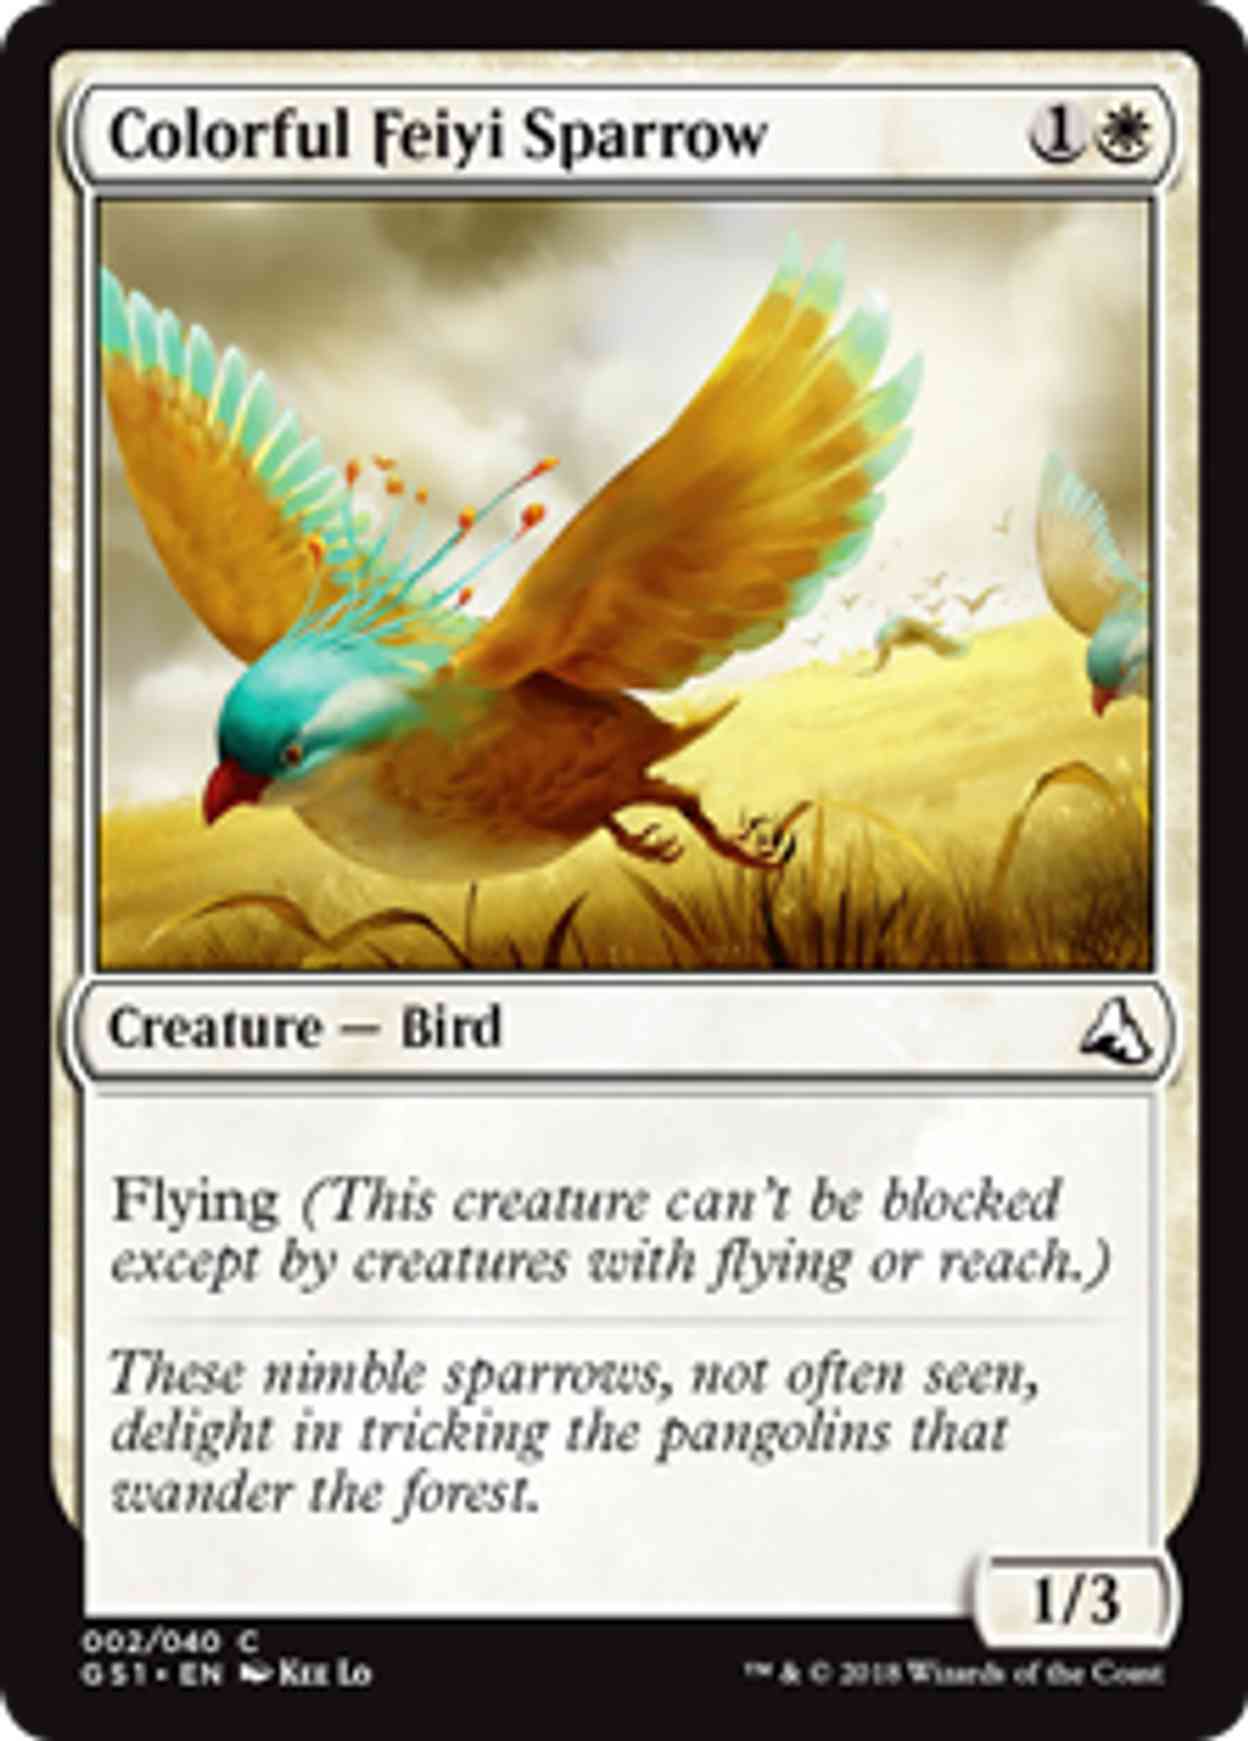 Colorful Feiyi Sparrow magic card front